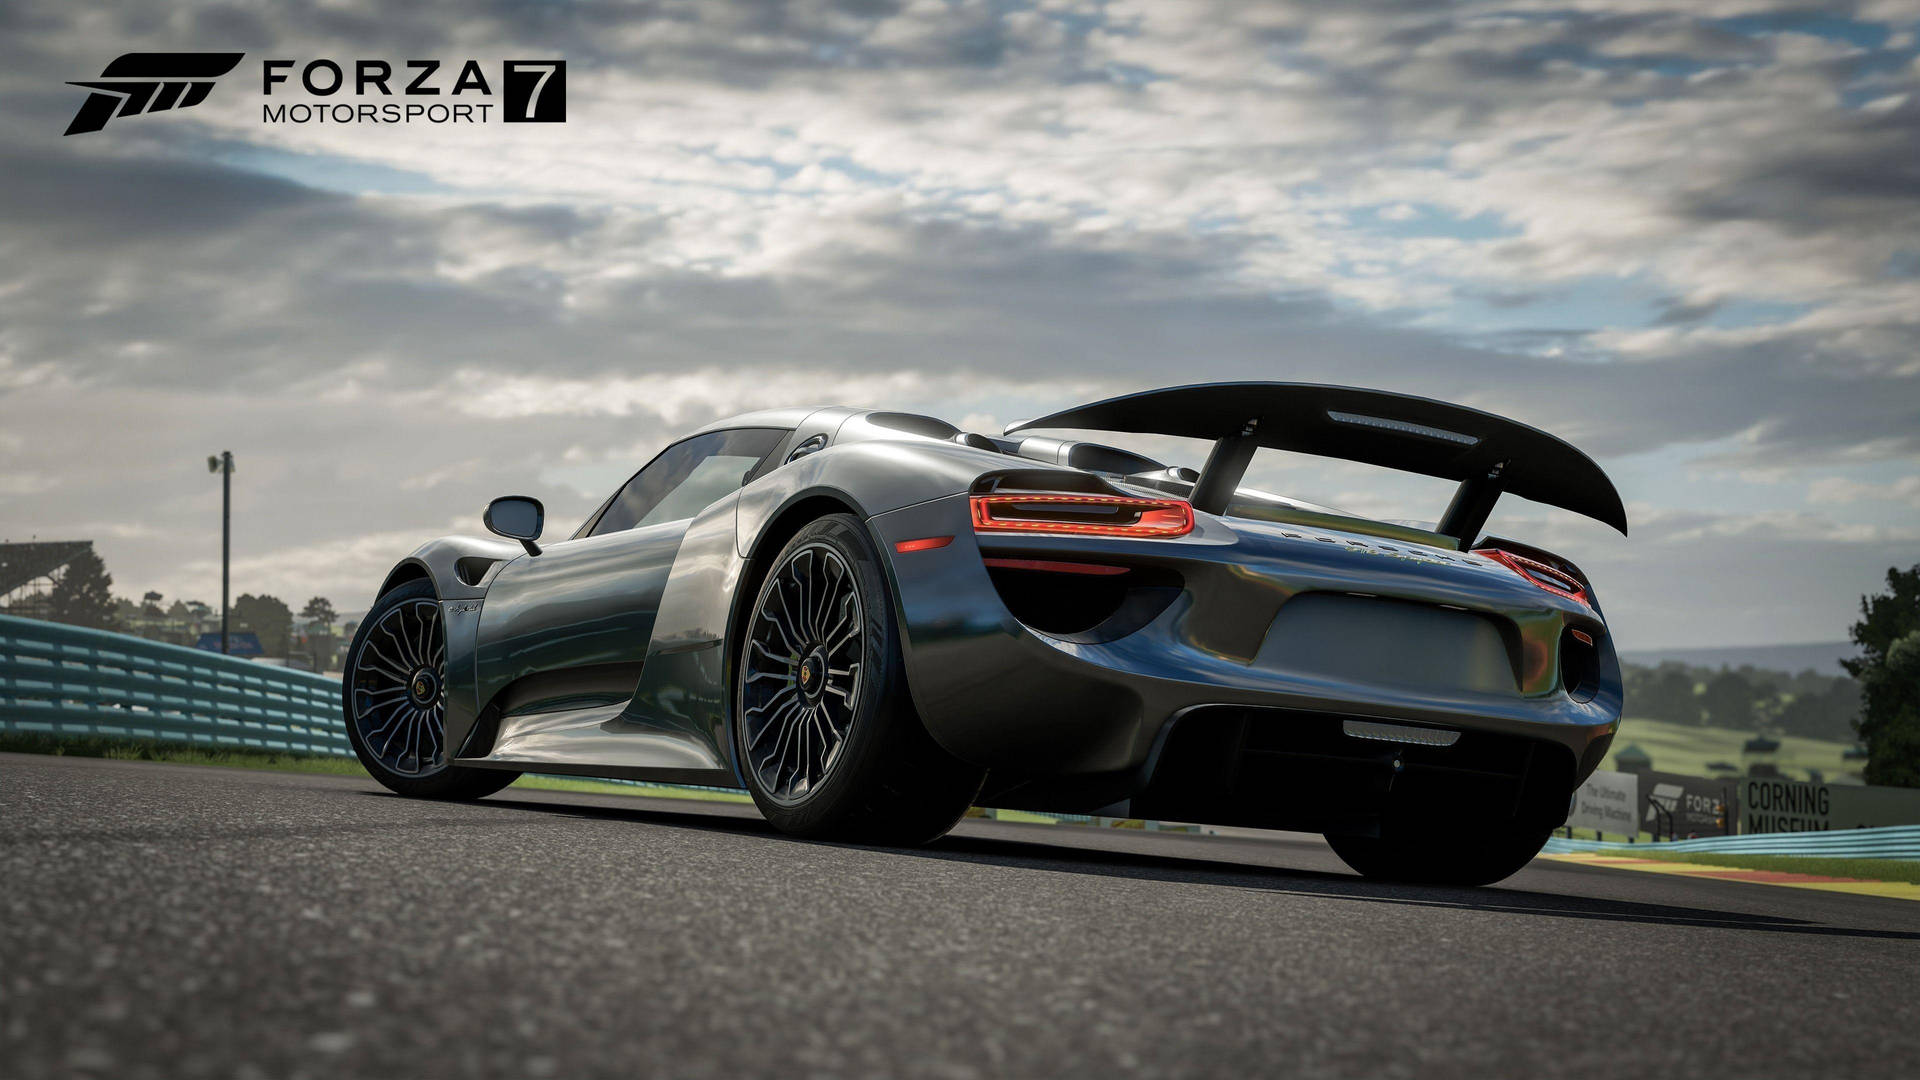 Thrilling Speed - Lotus Elise on Forza 7 Wallpaper